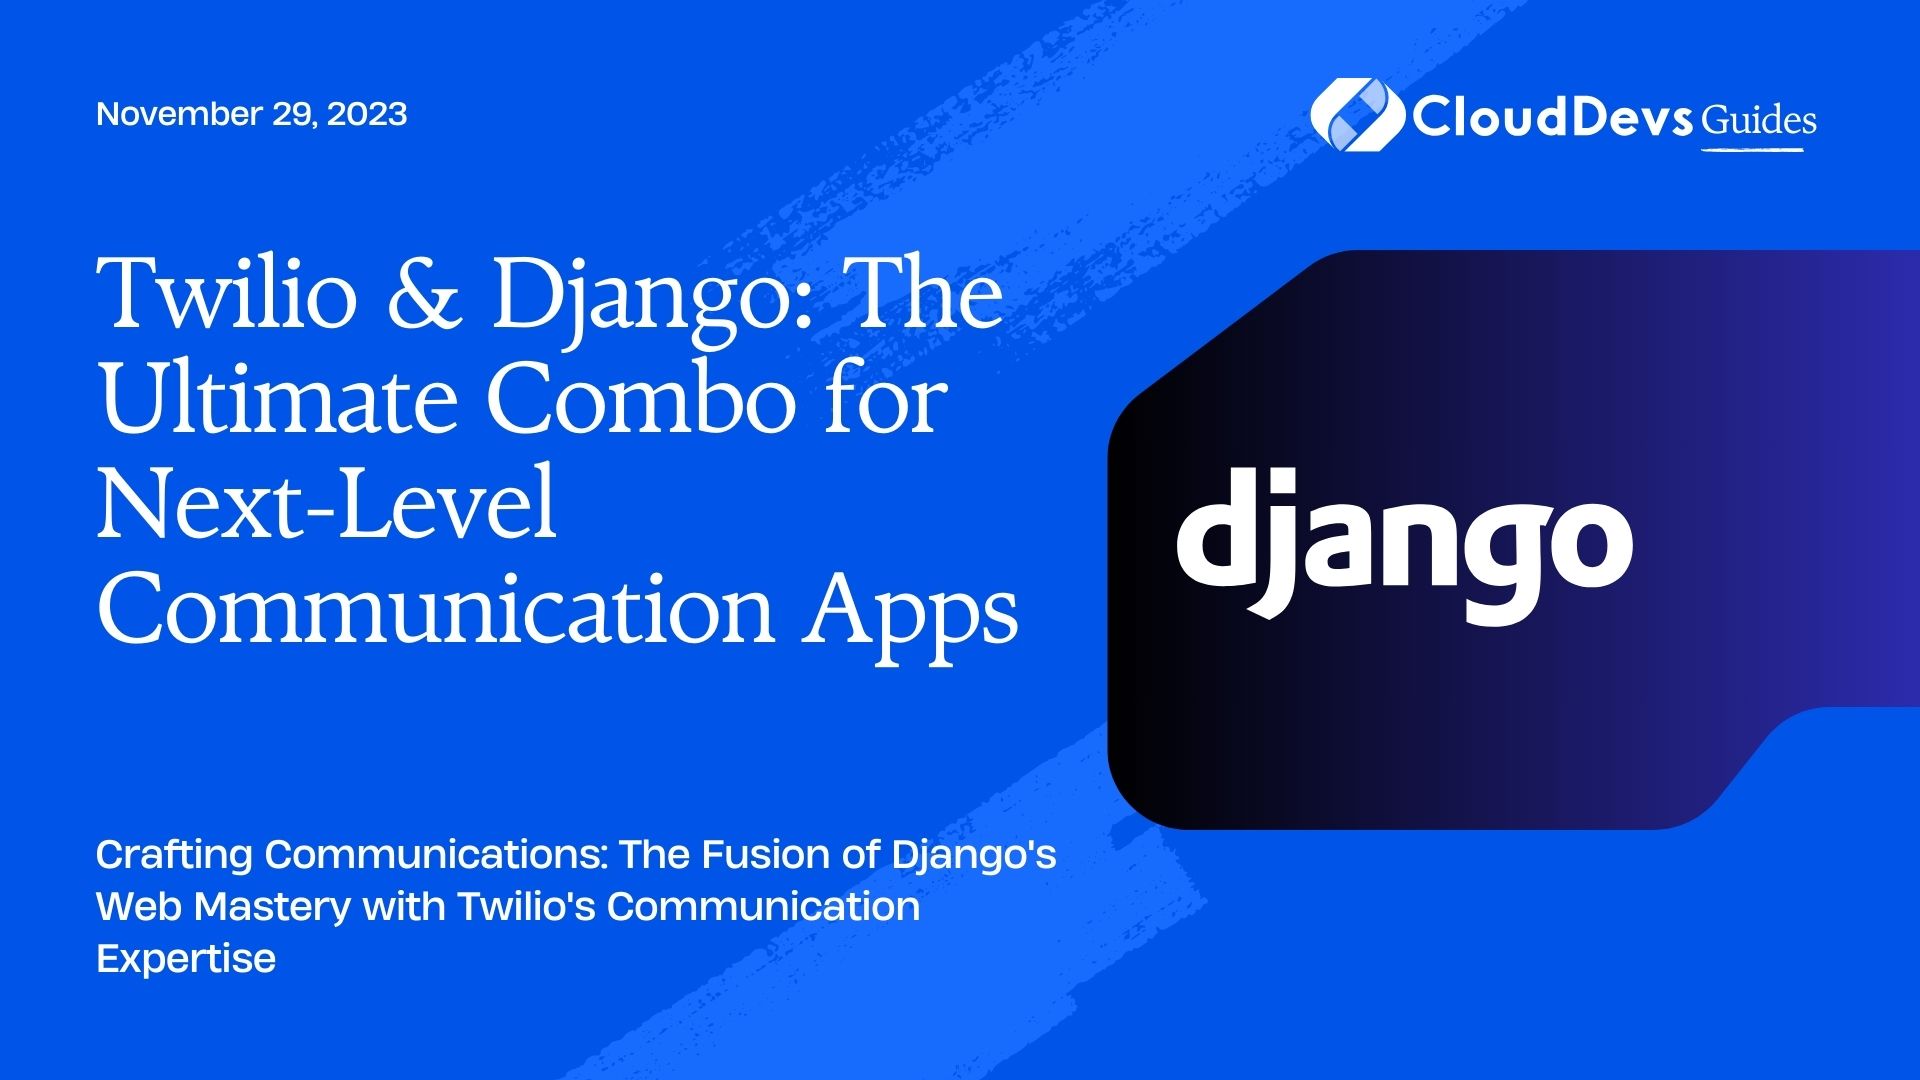 Twilio & Django: The Ultimate Combo for Next-Level Communication Apps